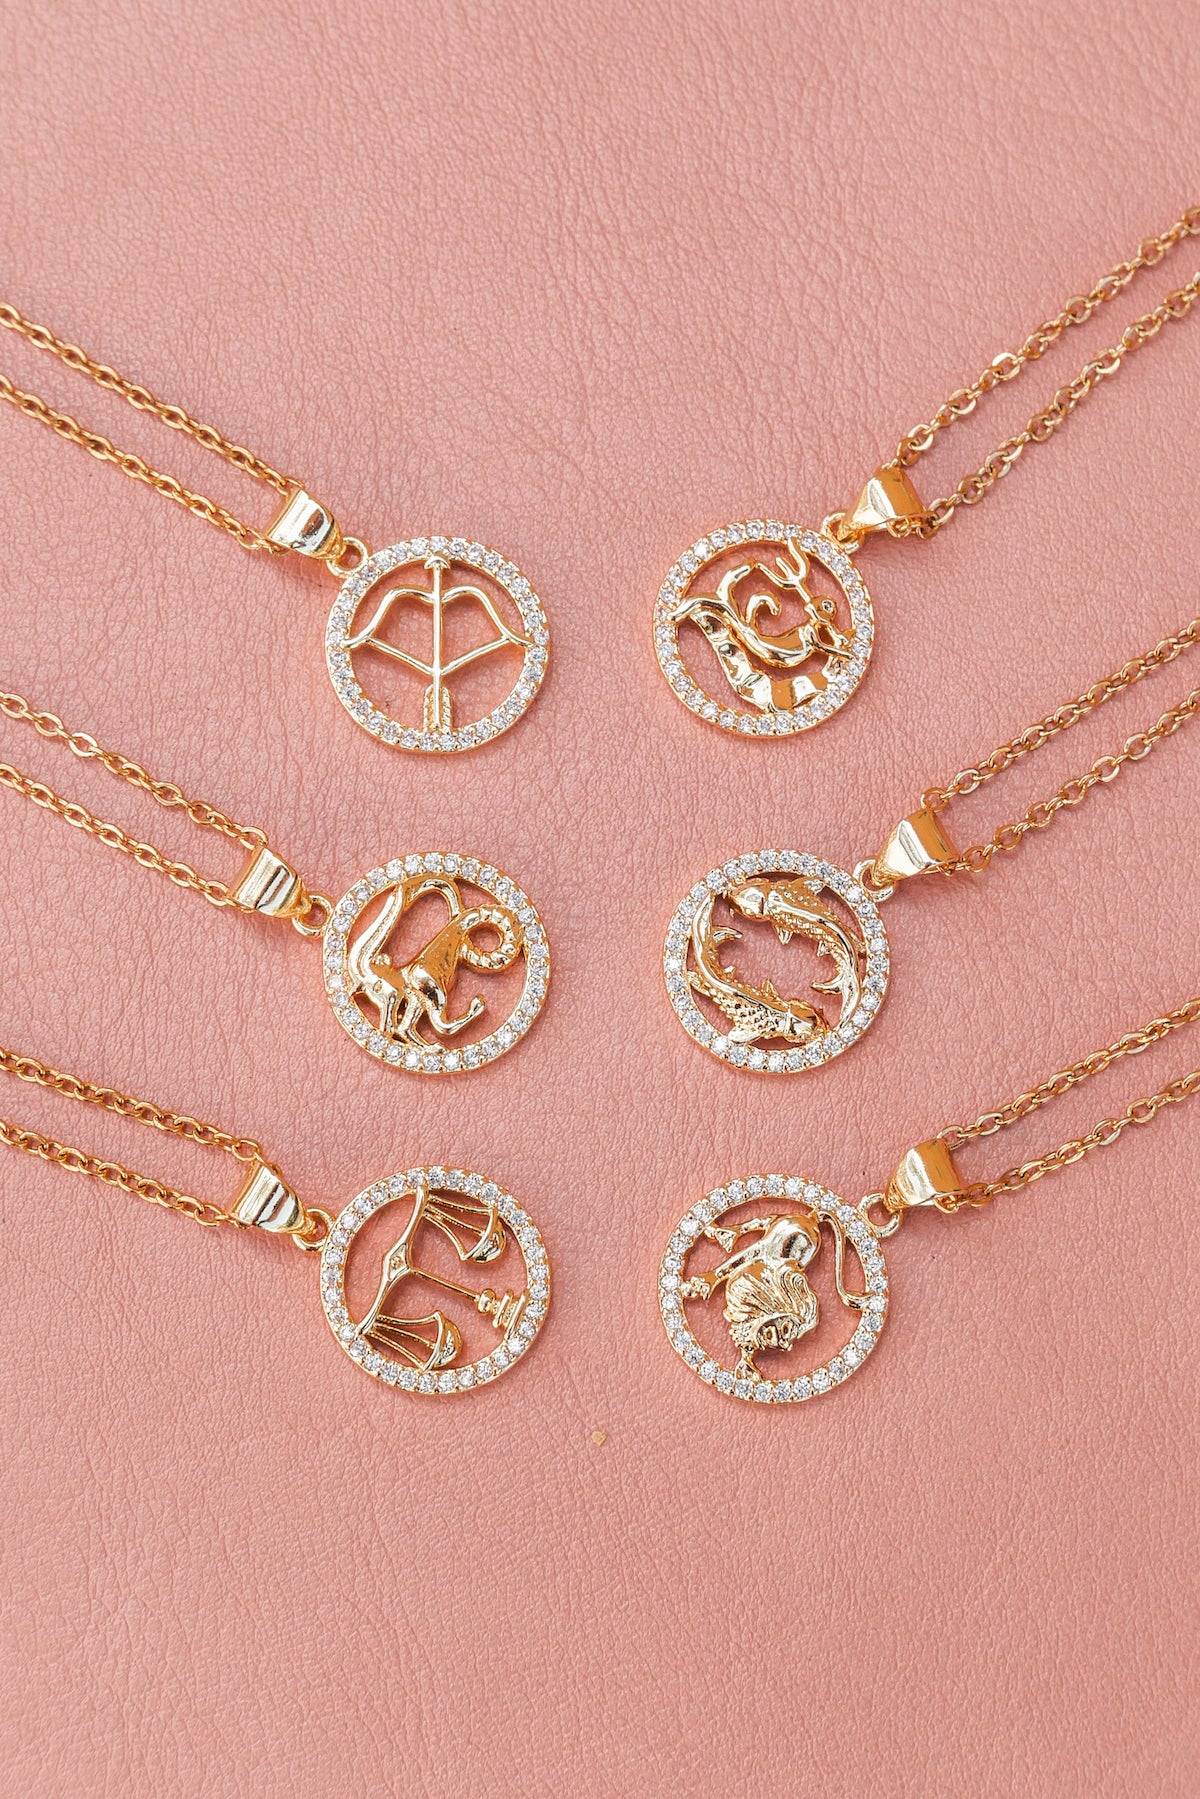 6 styles of zodiac necklace laying flat on pick backdrop